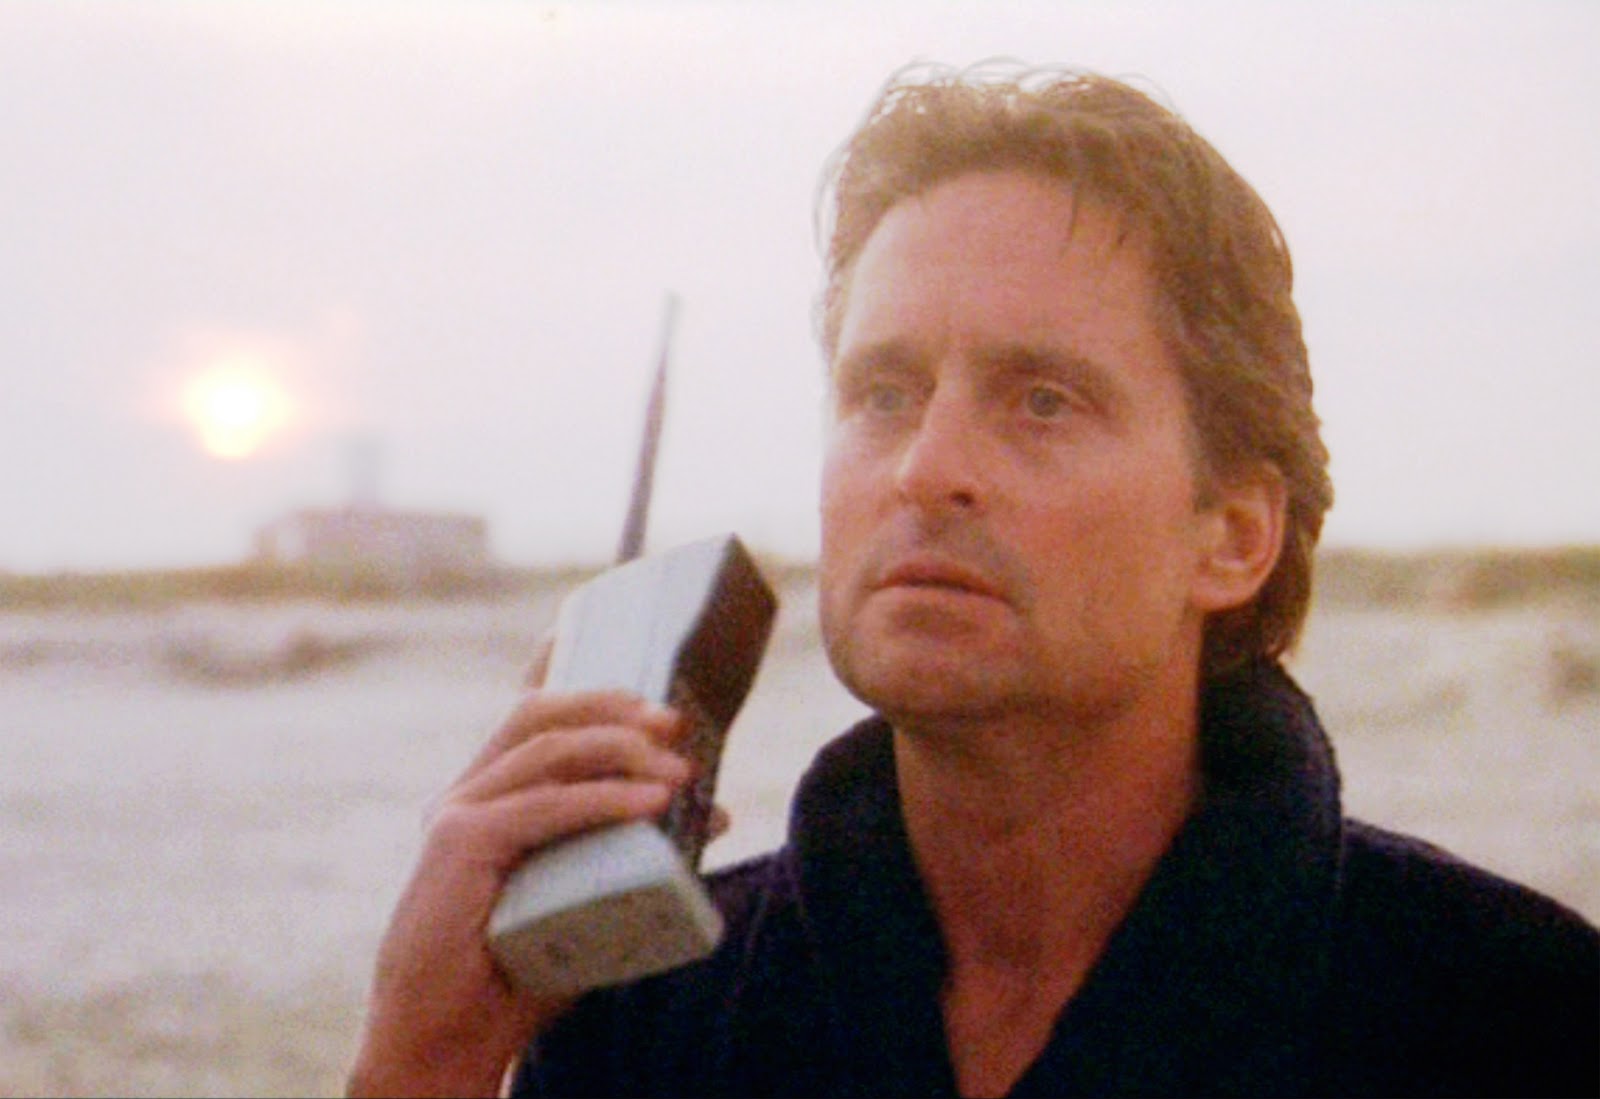 Michael Douglas' ridiculously big phone in Wall Street